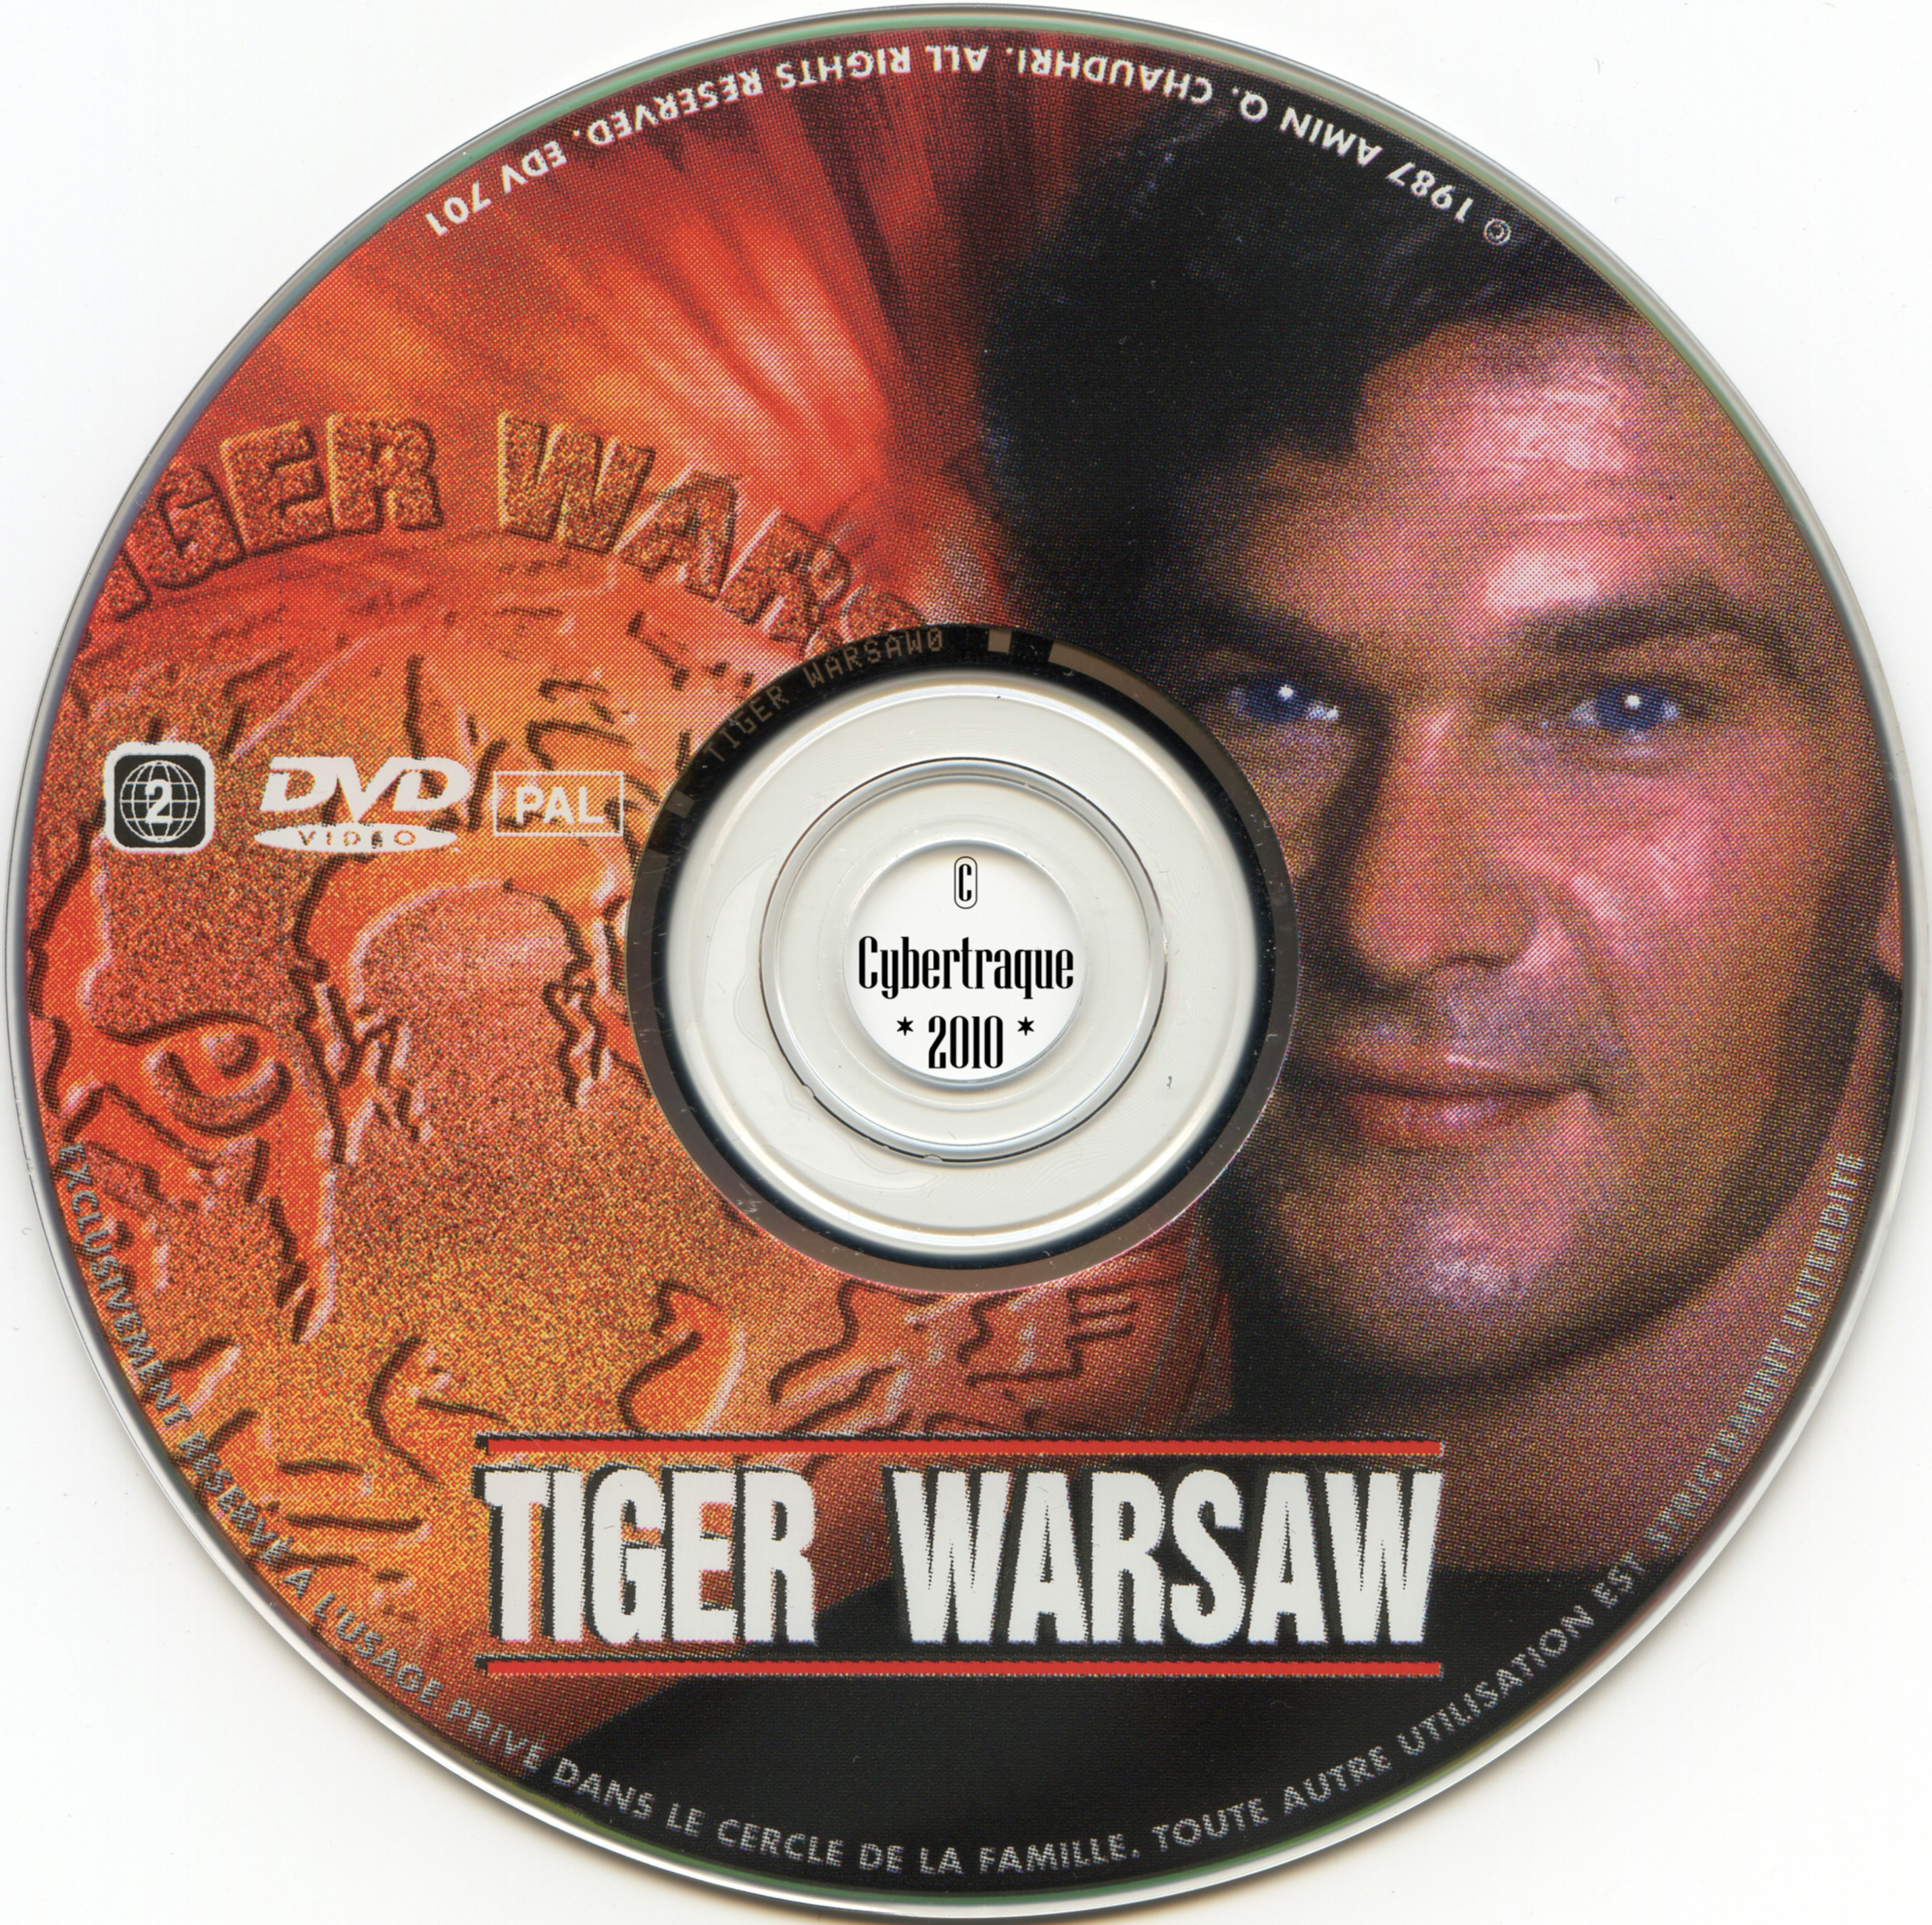 Tiger warsaw